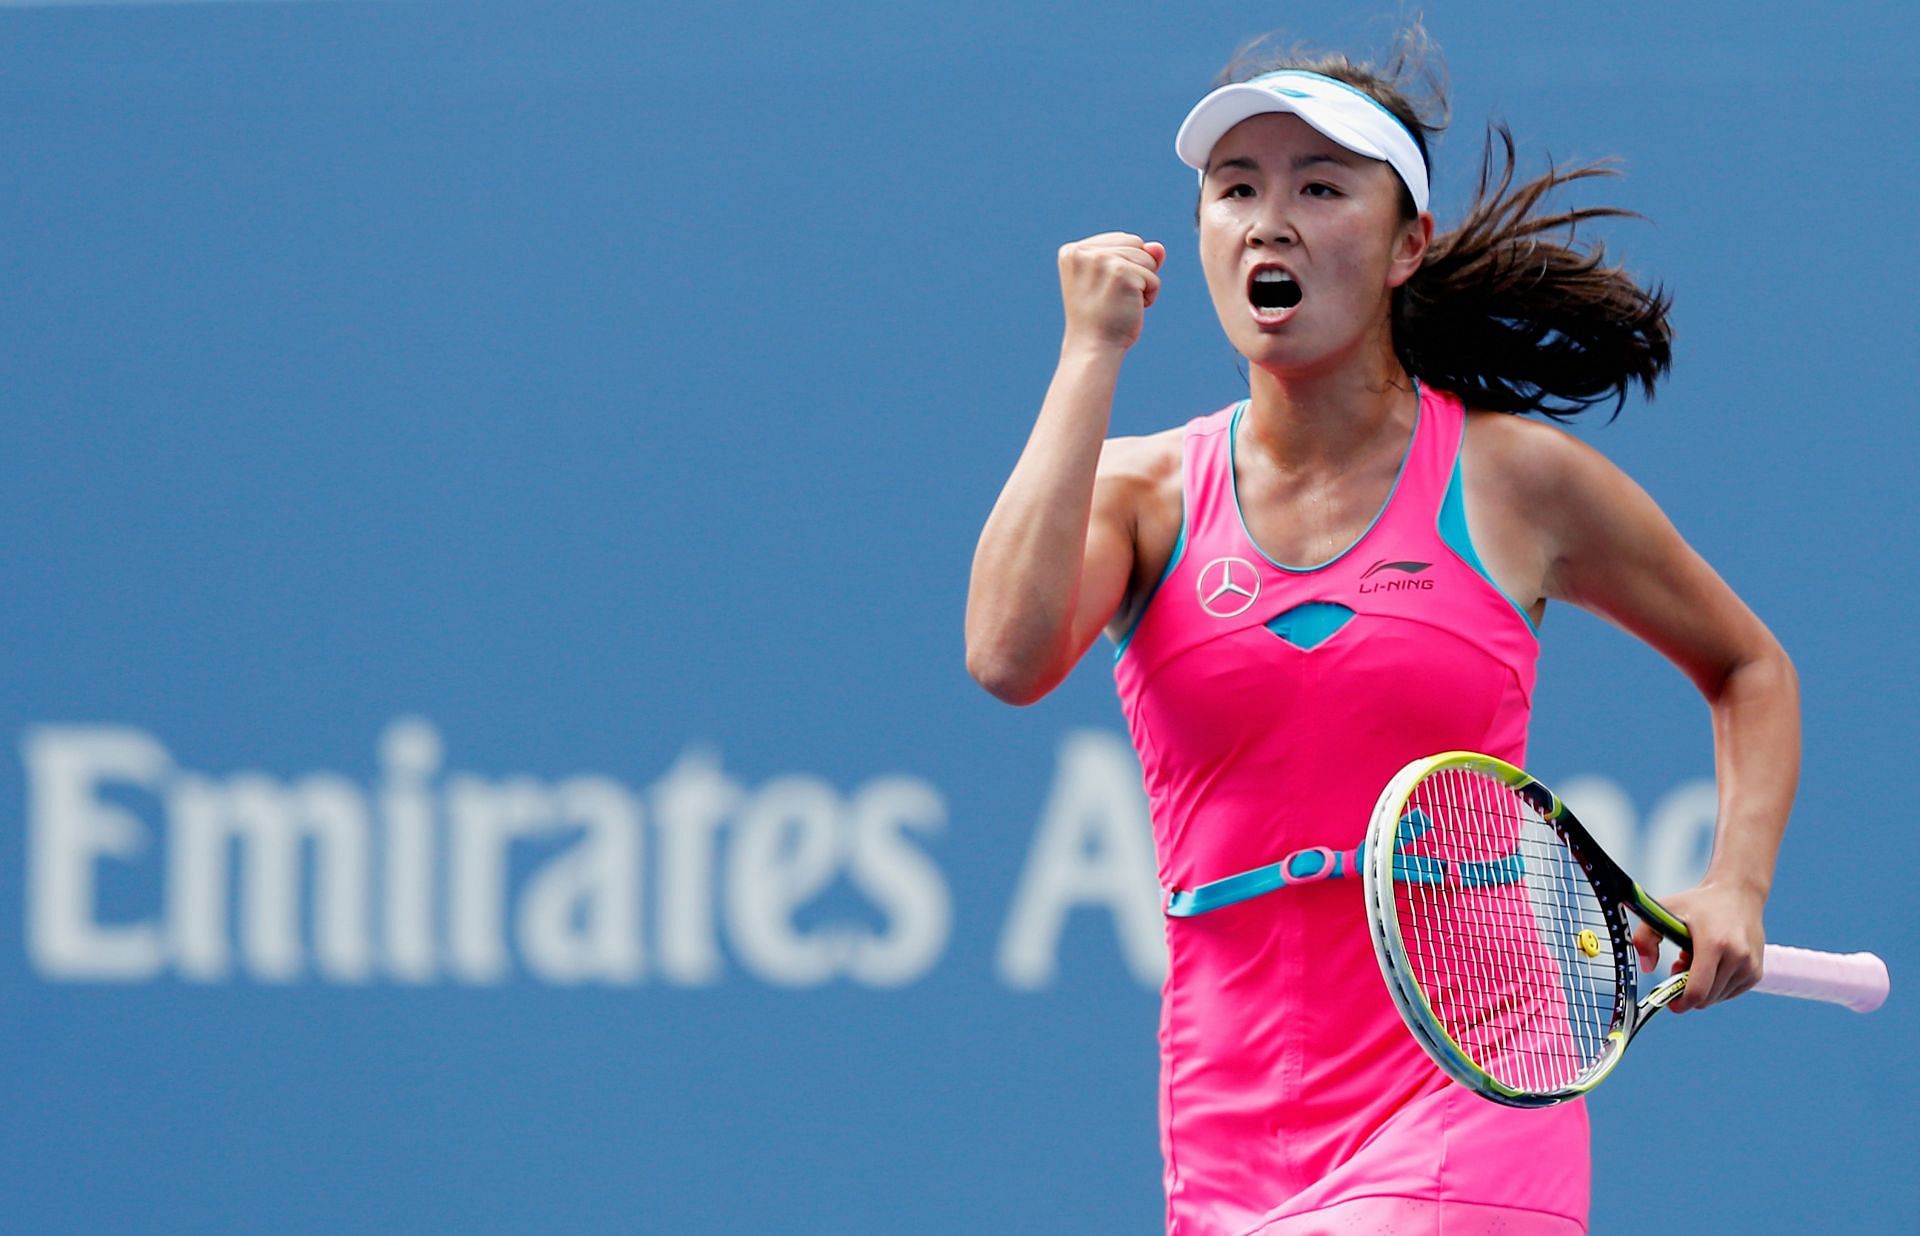 Peng Shuai at the 2014 US Open